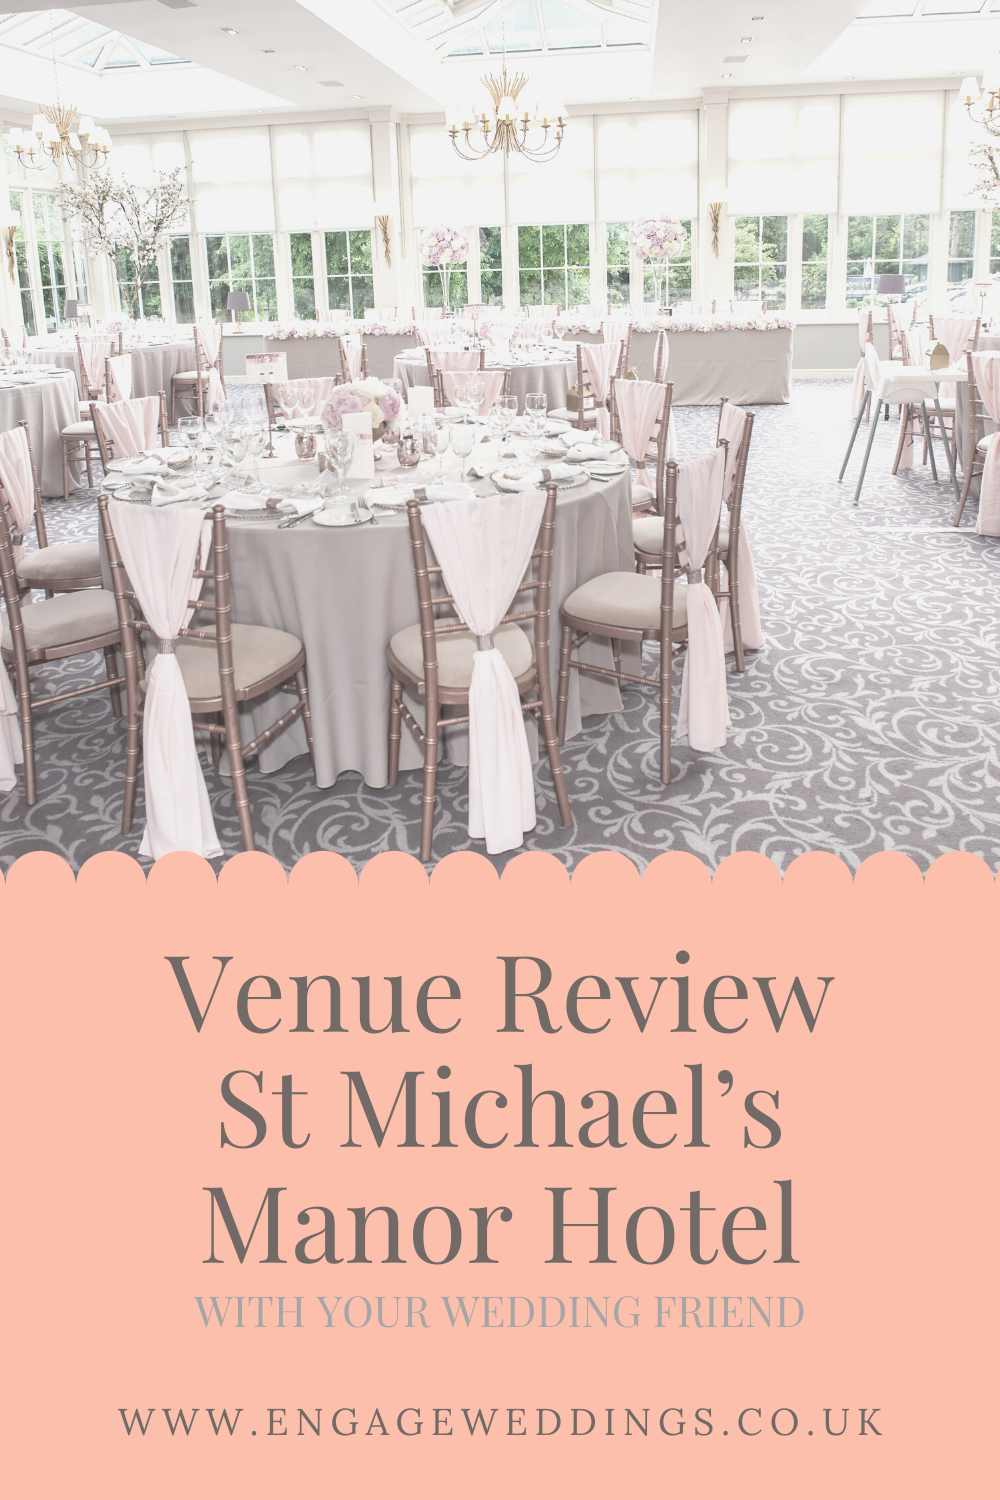 Venue Review - St Michael’s Manor Hotel_engageweddings.co.uk